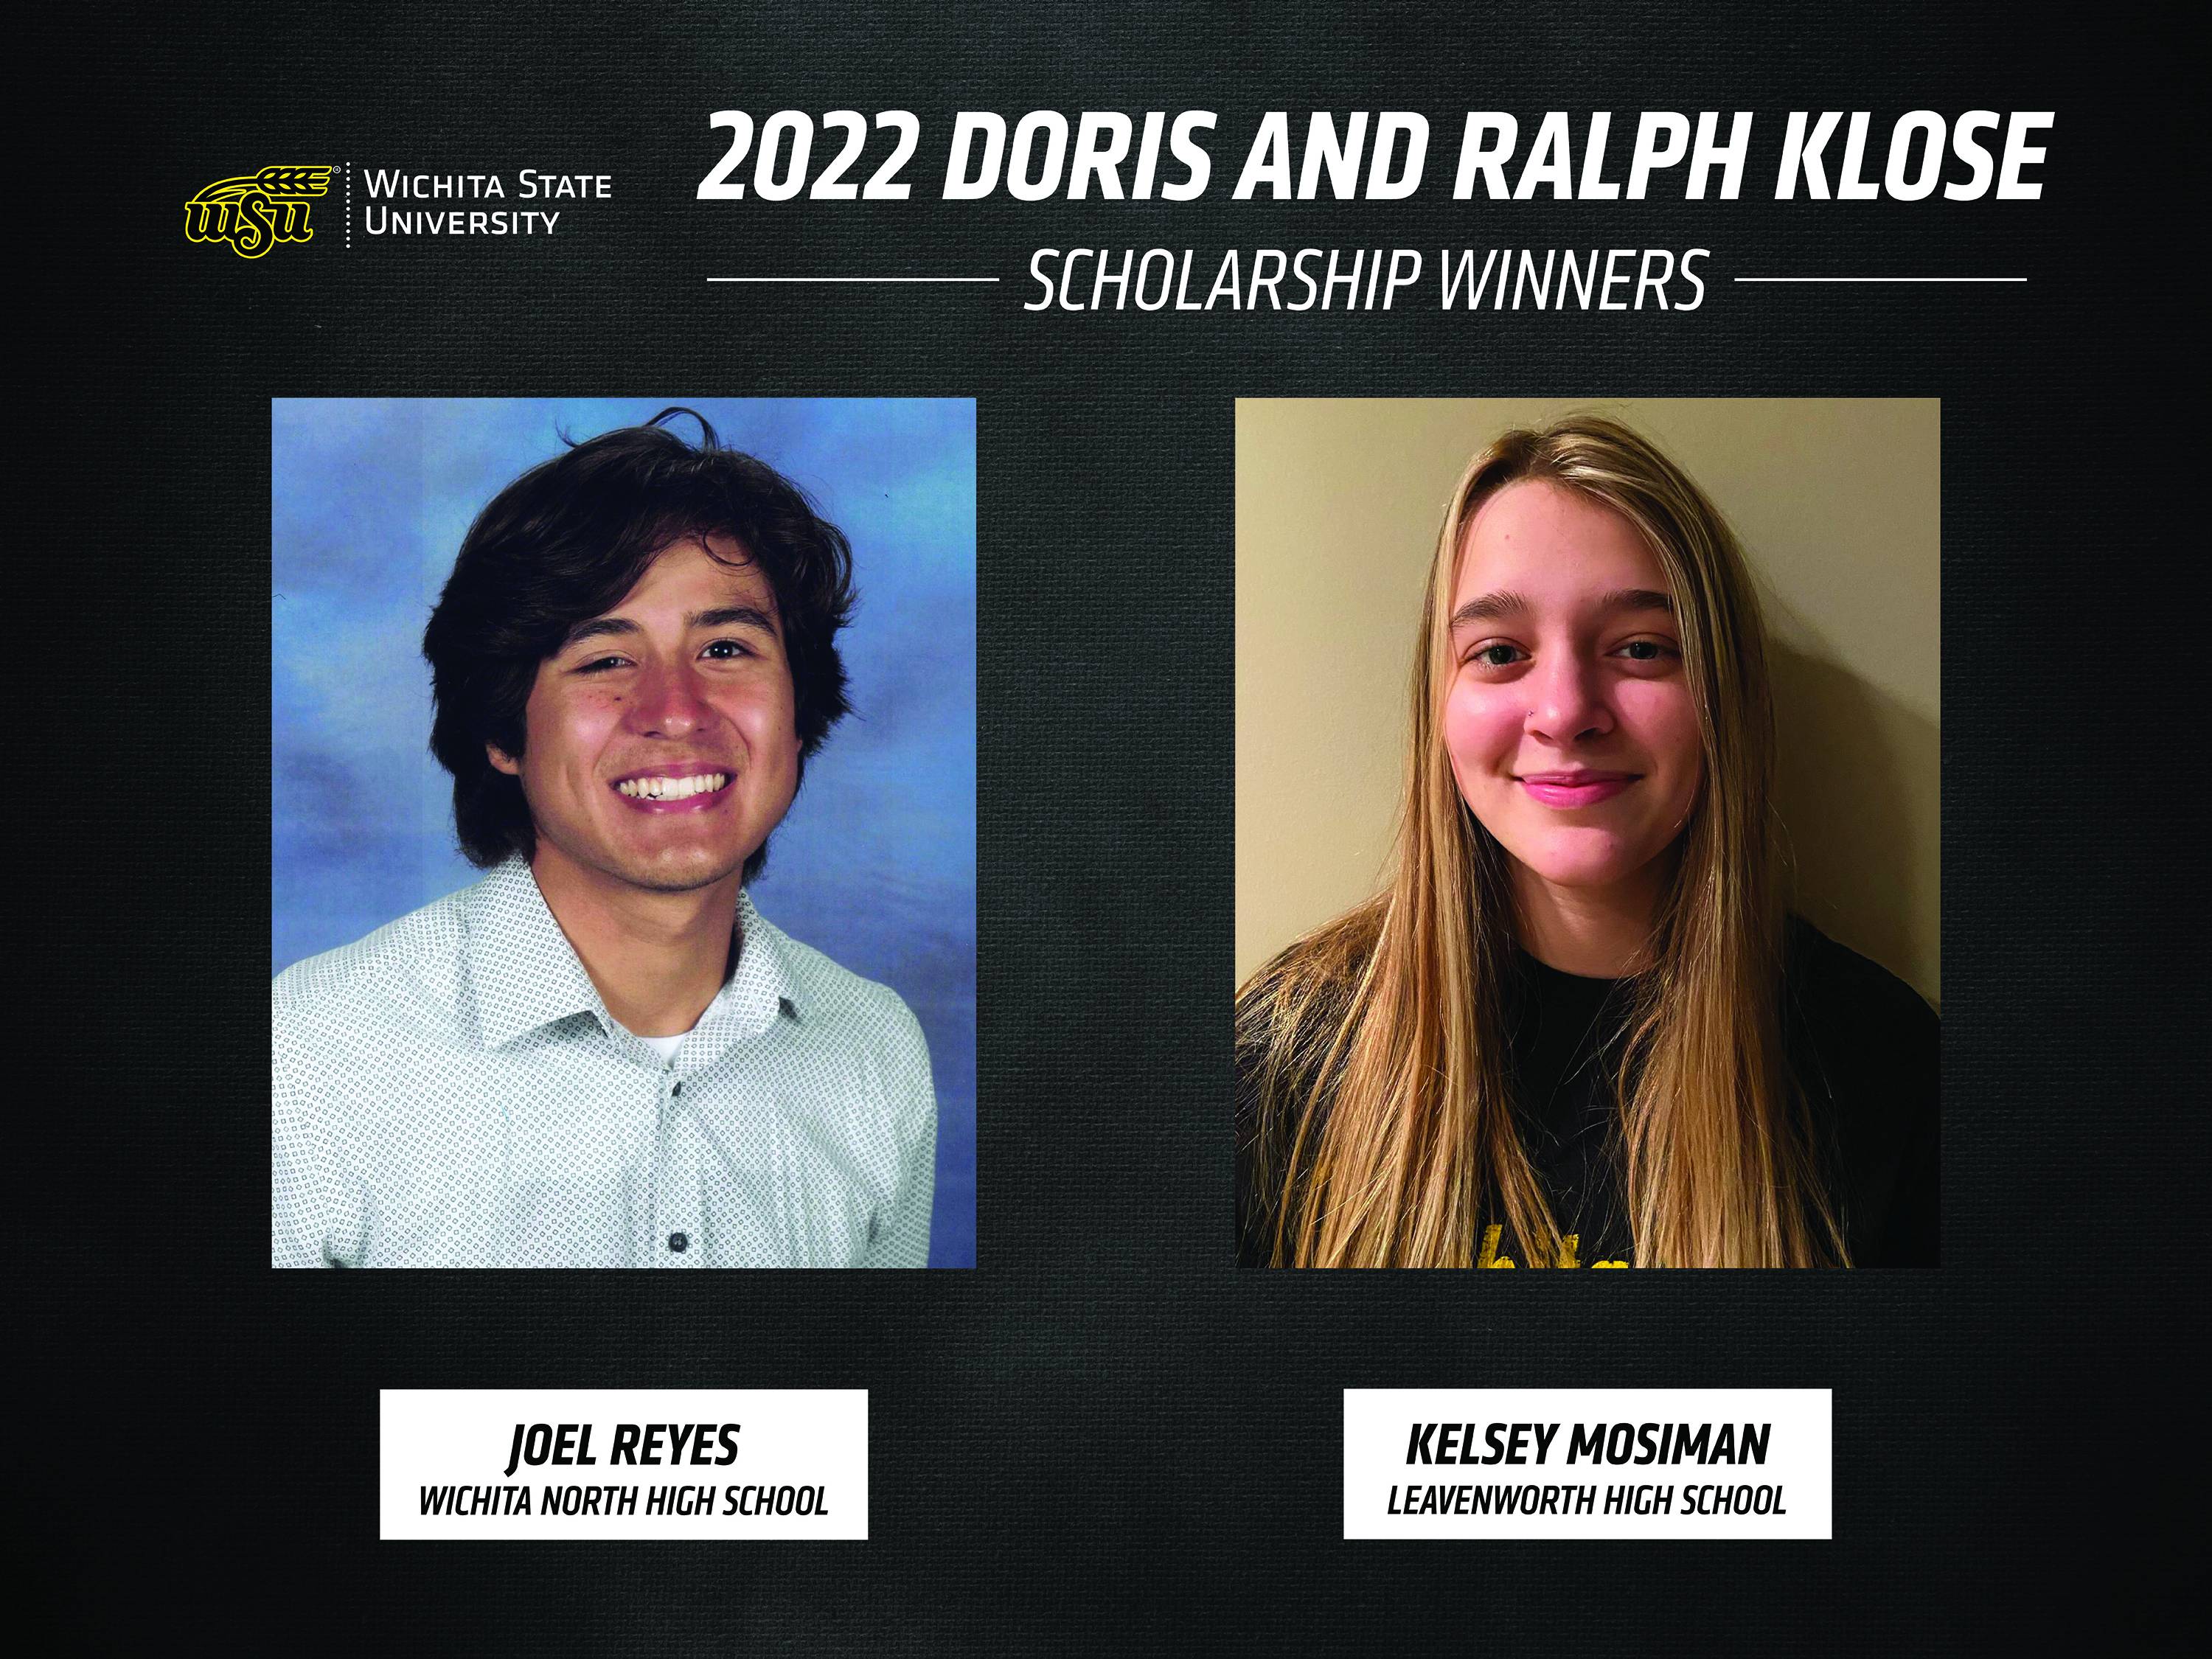 Winners of the Klose Scholarship